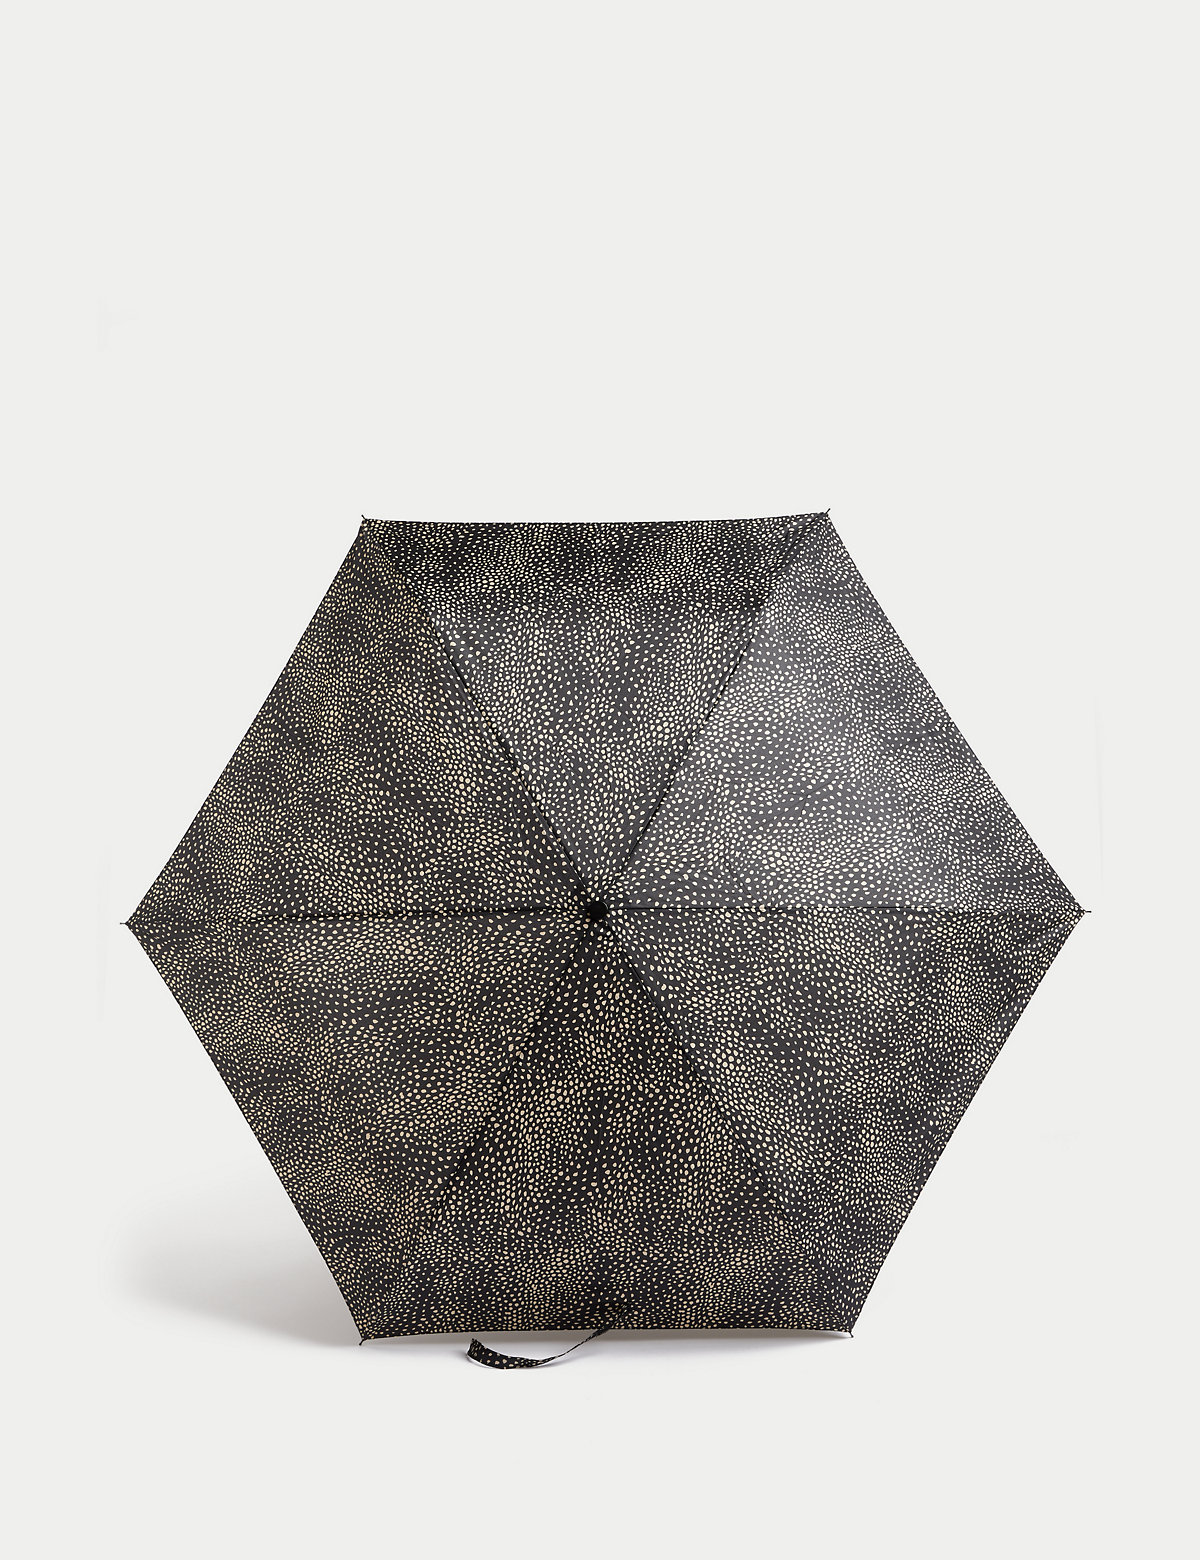 Polka Dot Compact Umbrella